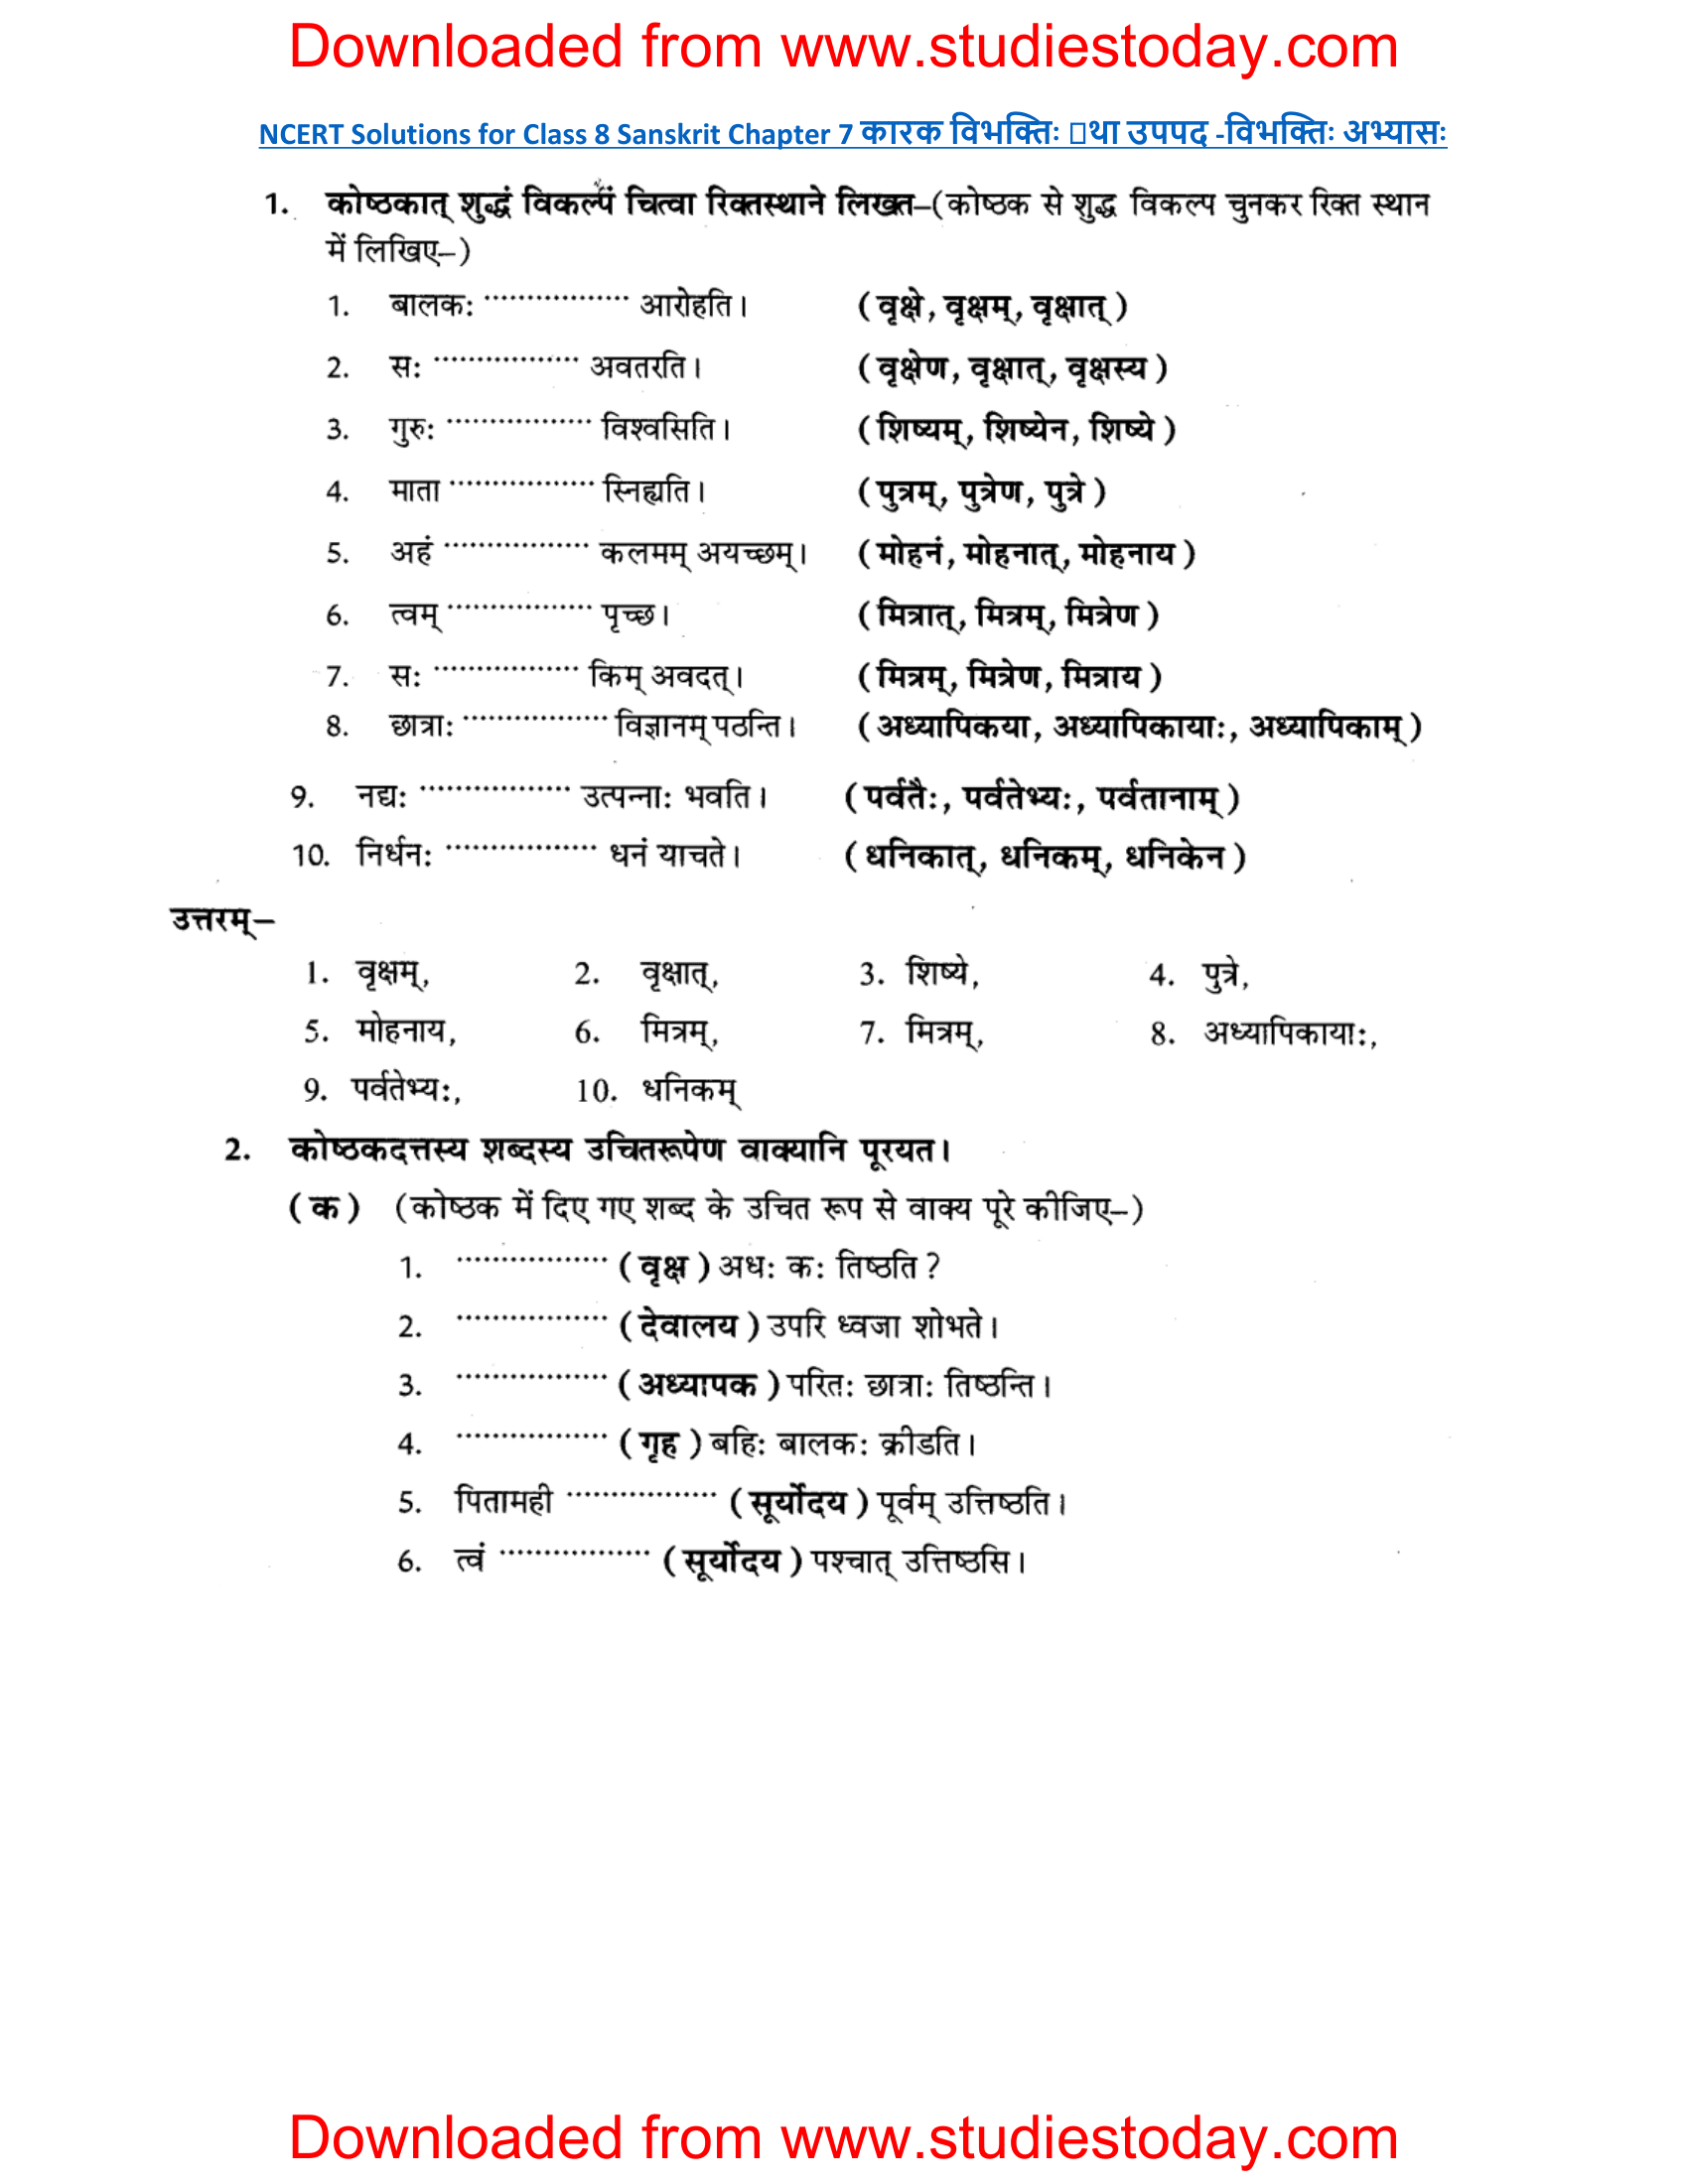 NCERT Solutions Class 8 Sanskrit Chapter 7 Karak Vibhakti tatha uppad ...